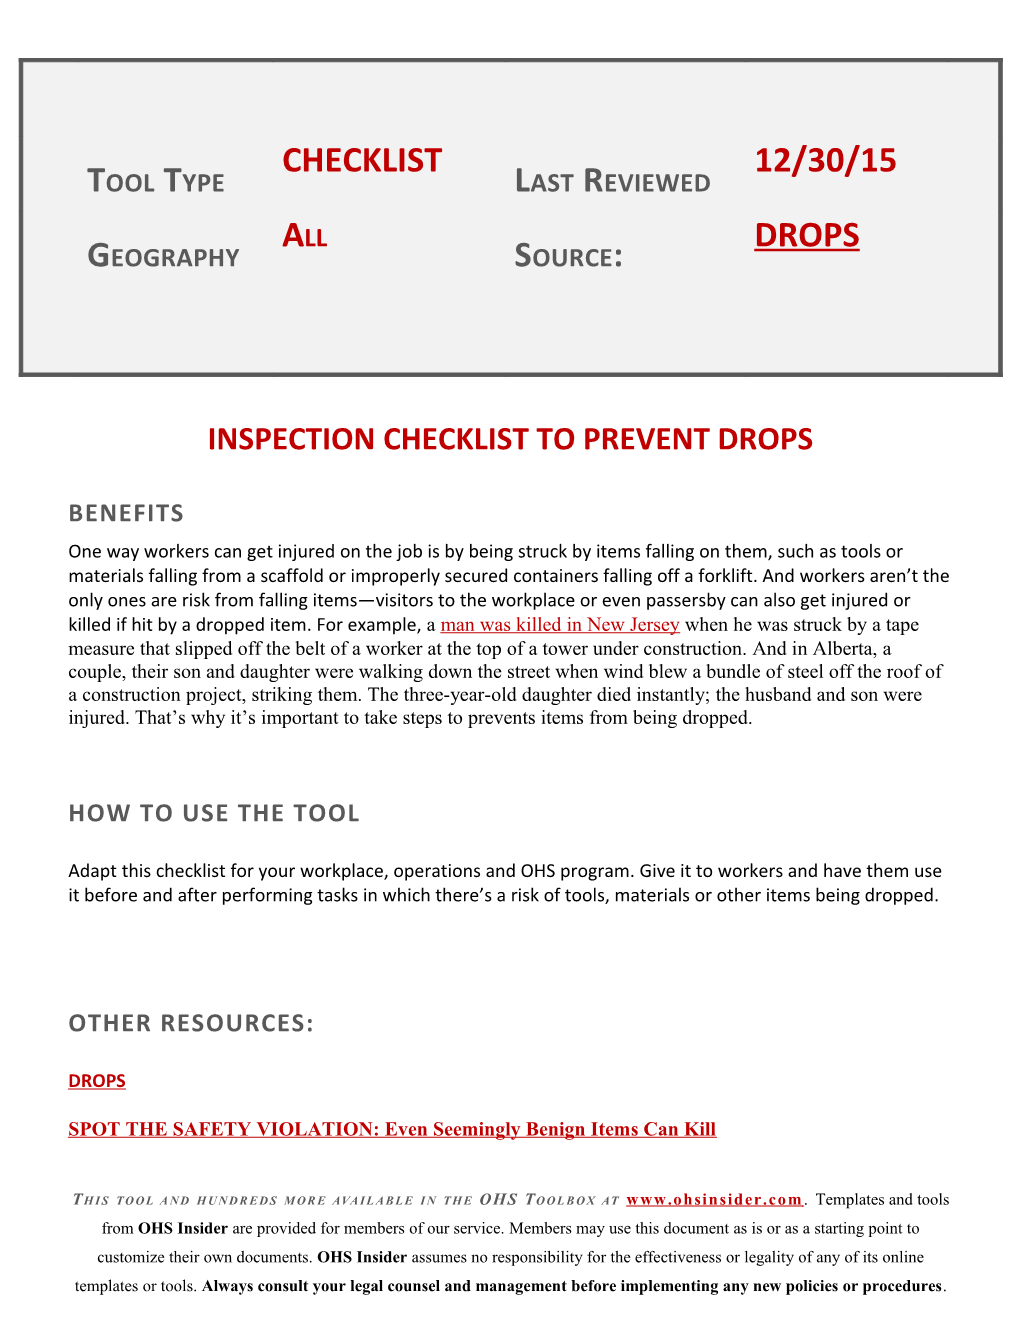 Inspection Checklist to Prevent Drops